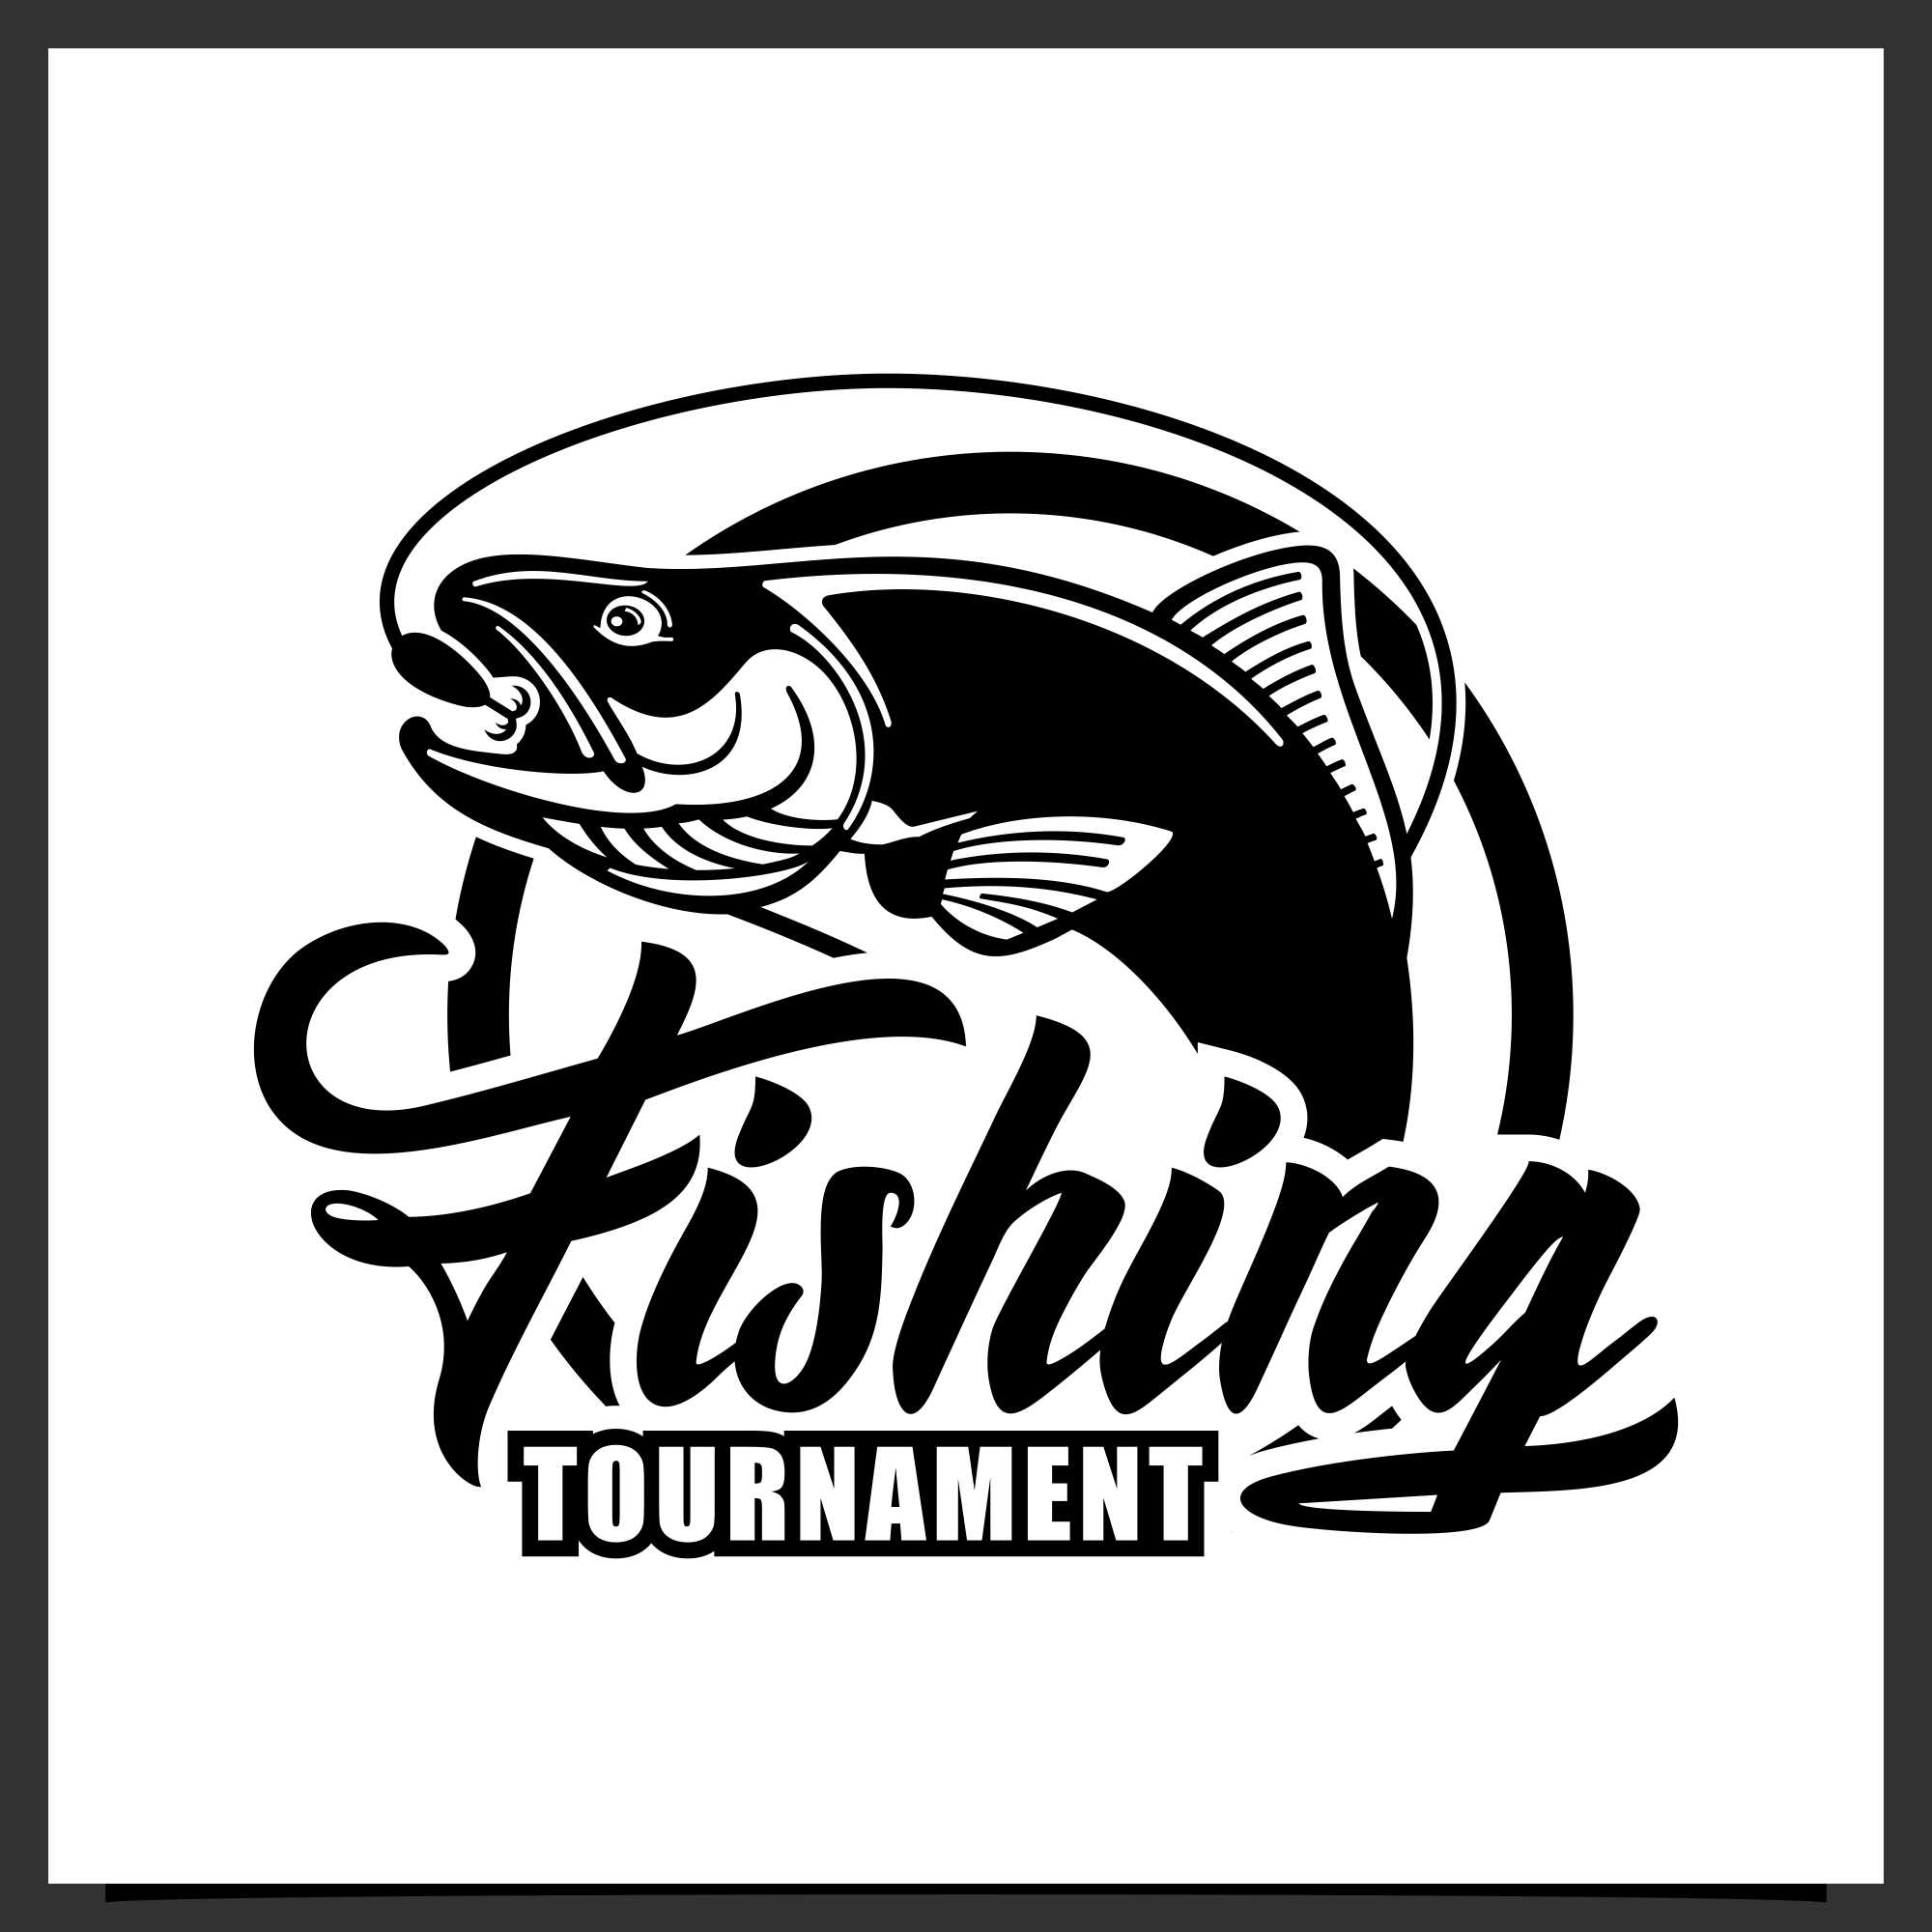 Fish Tournament logo vector design collection - $6 - MasterBundles